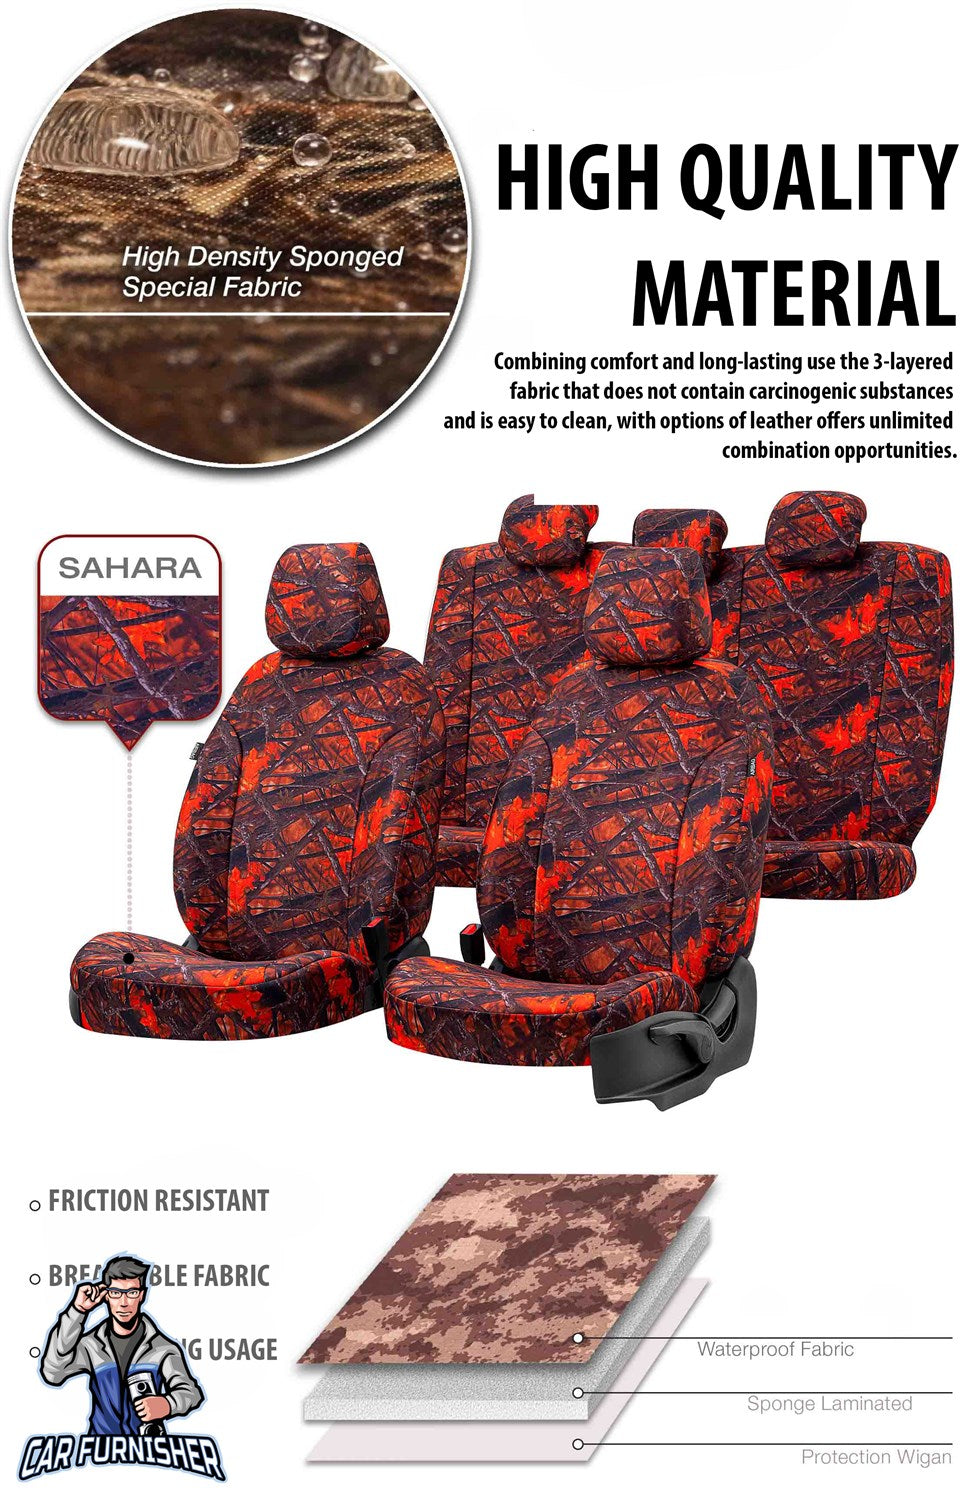 Nissan Qashqai Seat Covers Camouflage Waterproof Design Alps Camo Waterproof Fabric